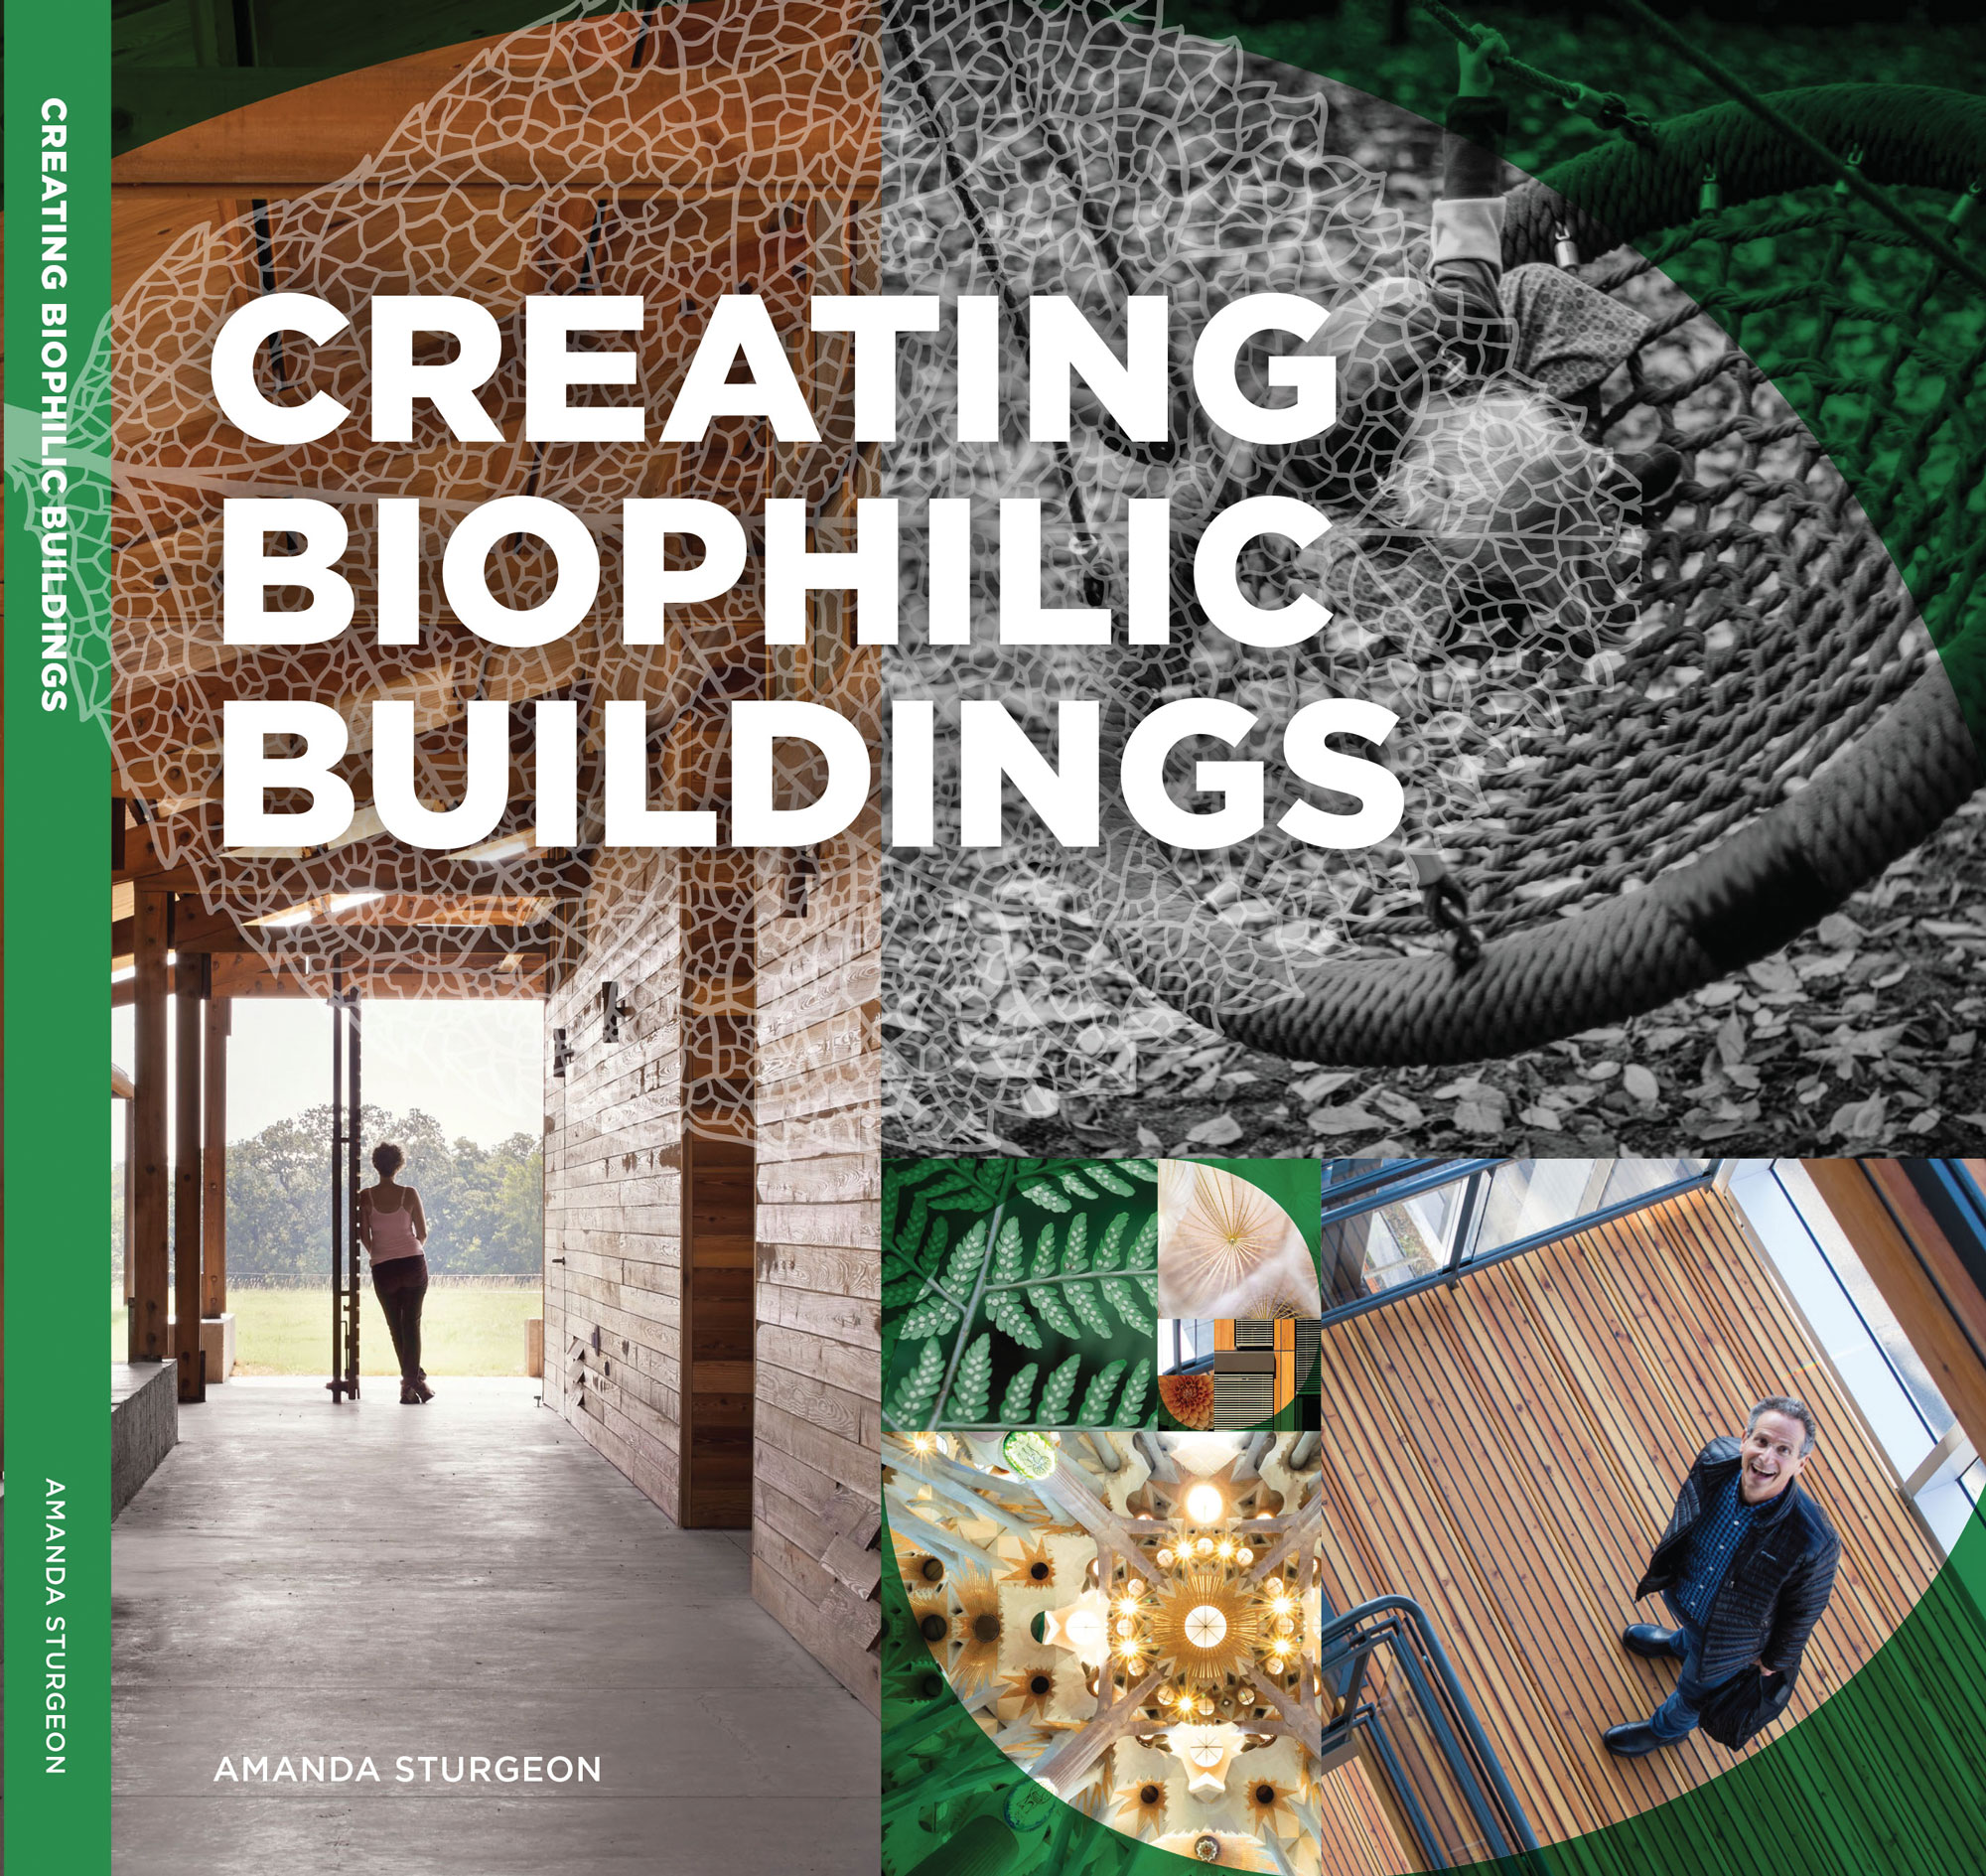 The Evolution of Biophilic Design